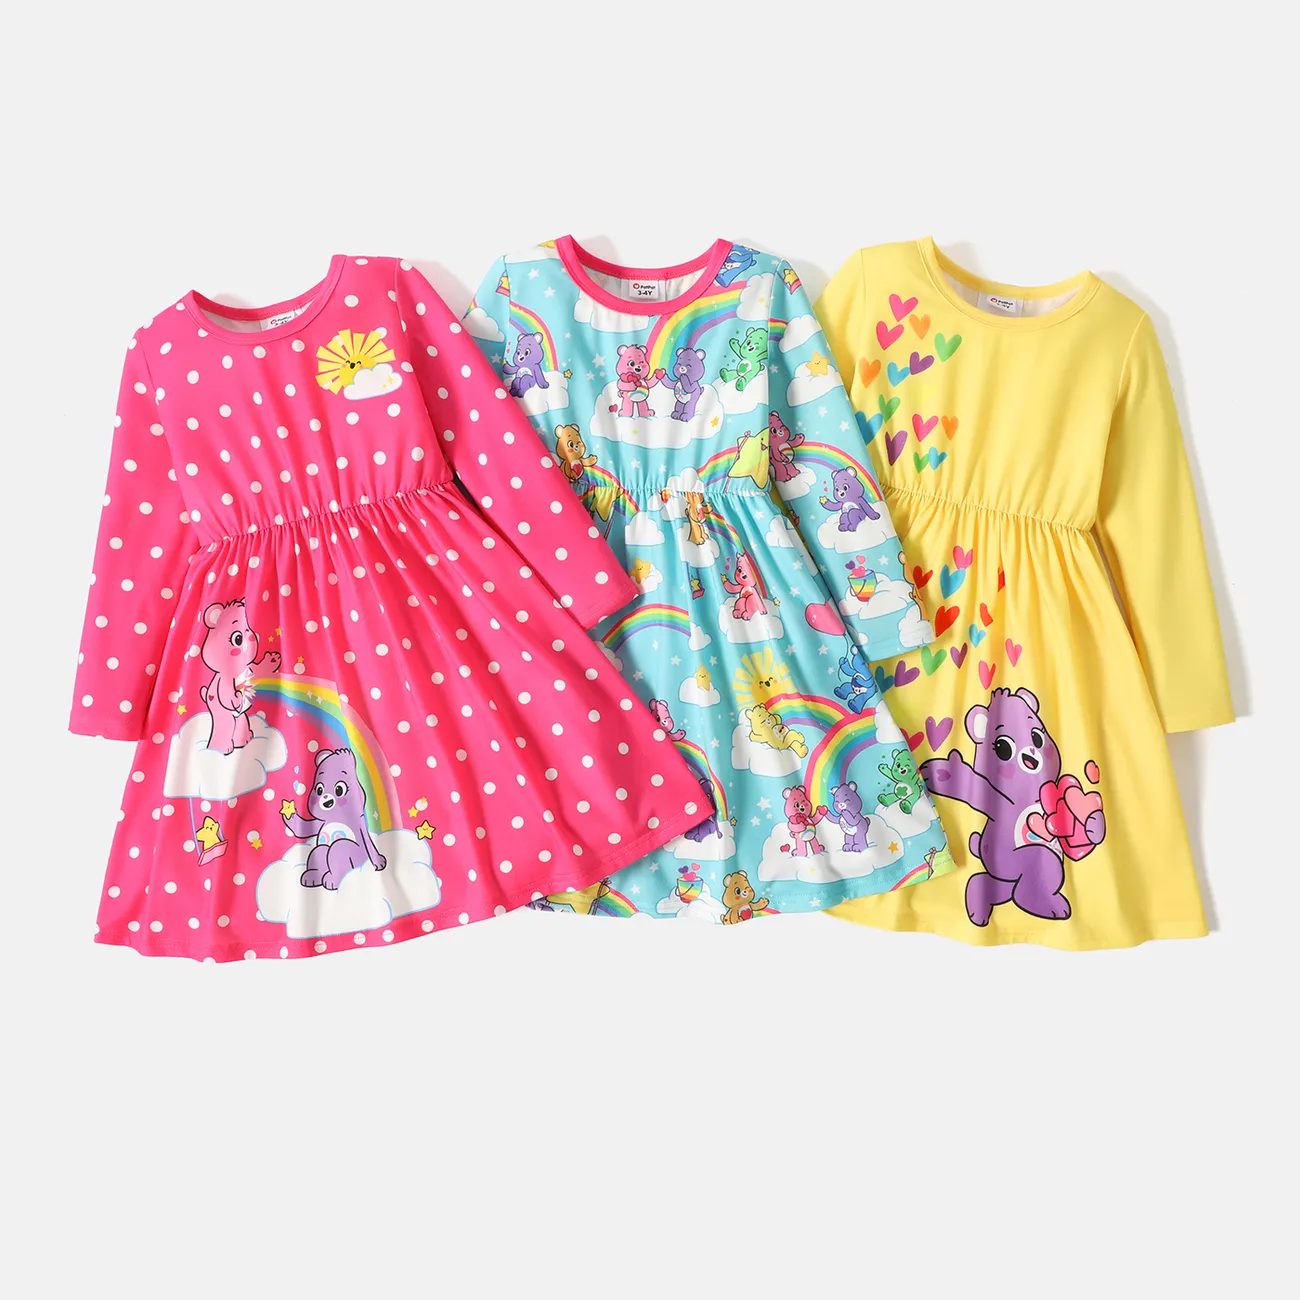 Care Bears Toddler Girl Rainbow/Heart Print/Polks dots Long-sleeve Dress Yellow big image 1